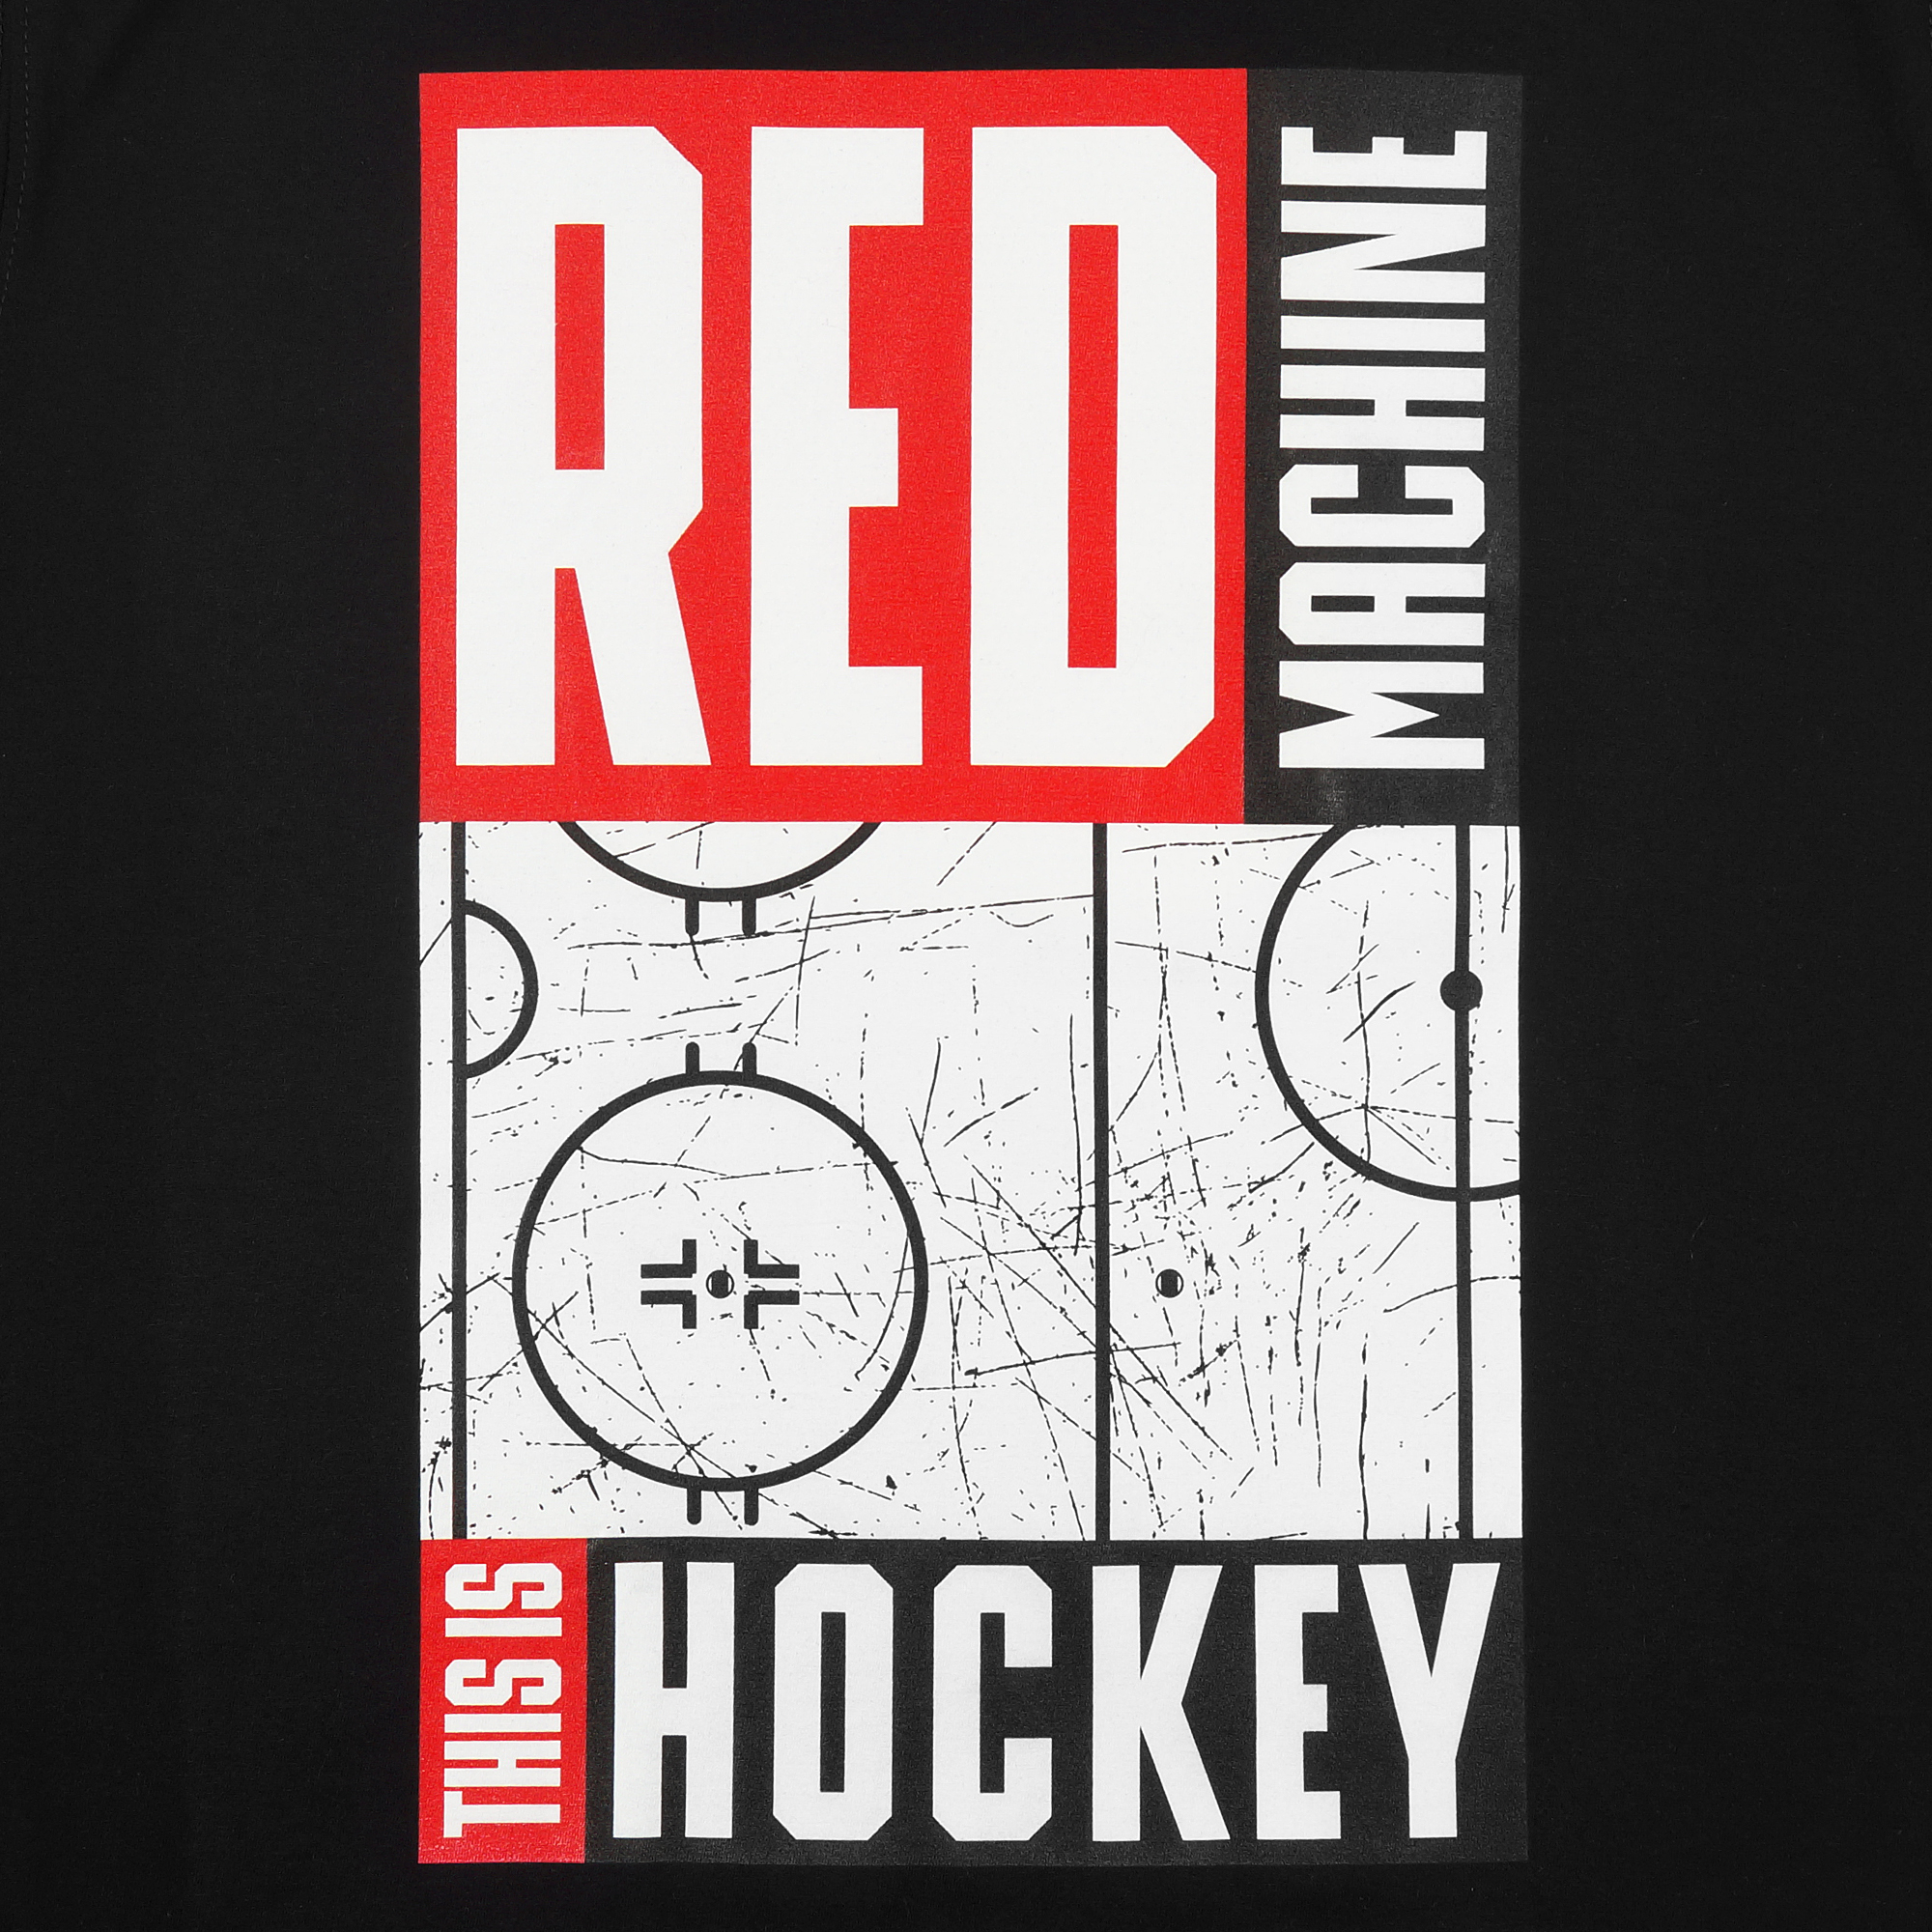 Футболка Red MachIne this is hockey площадка 1 черный